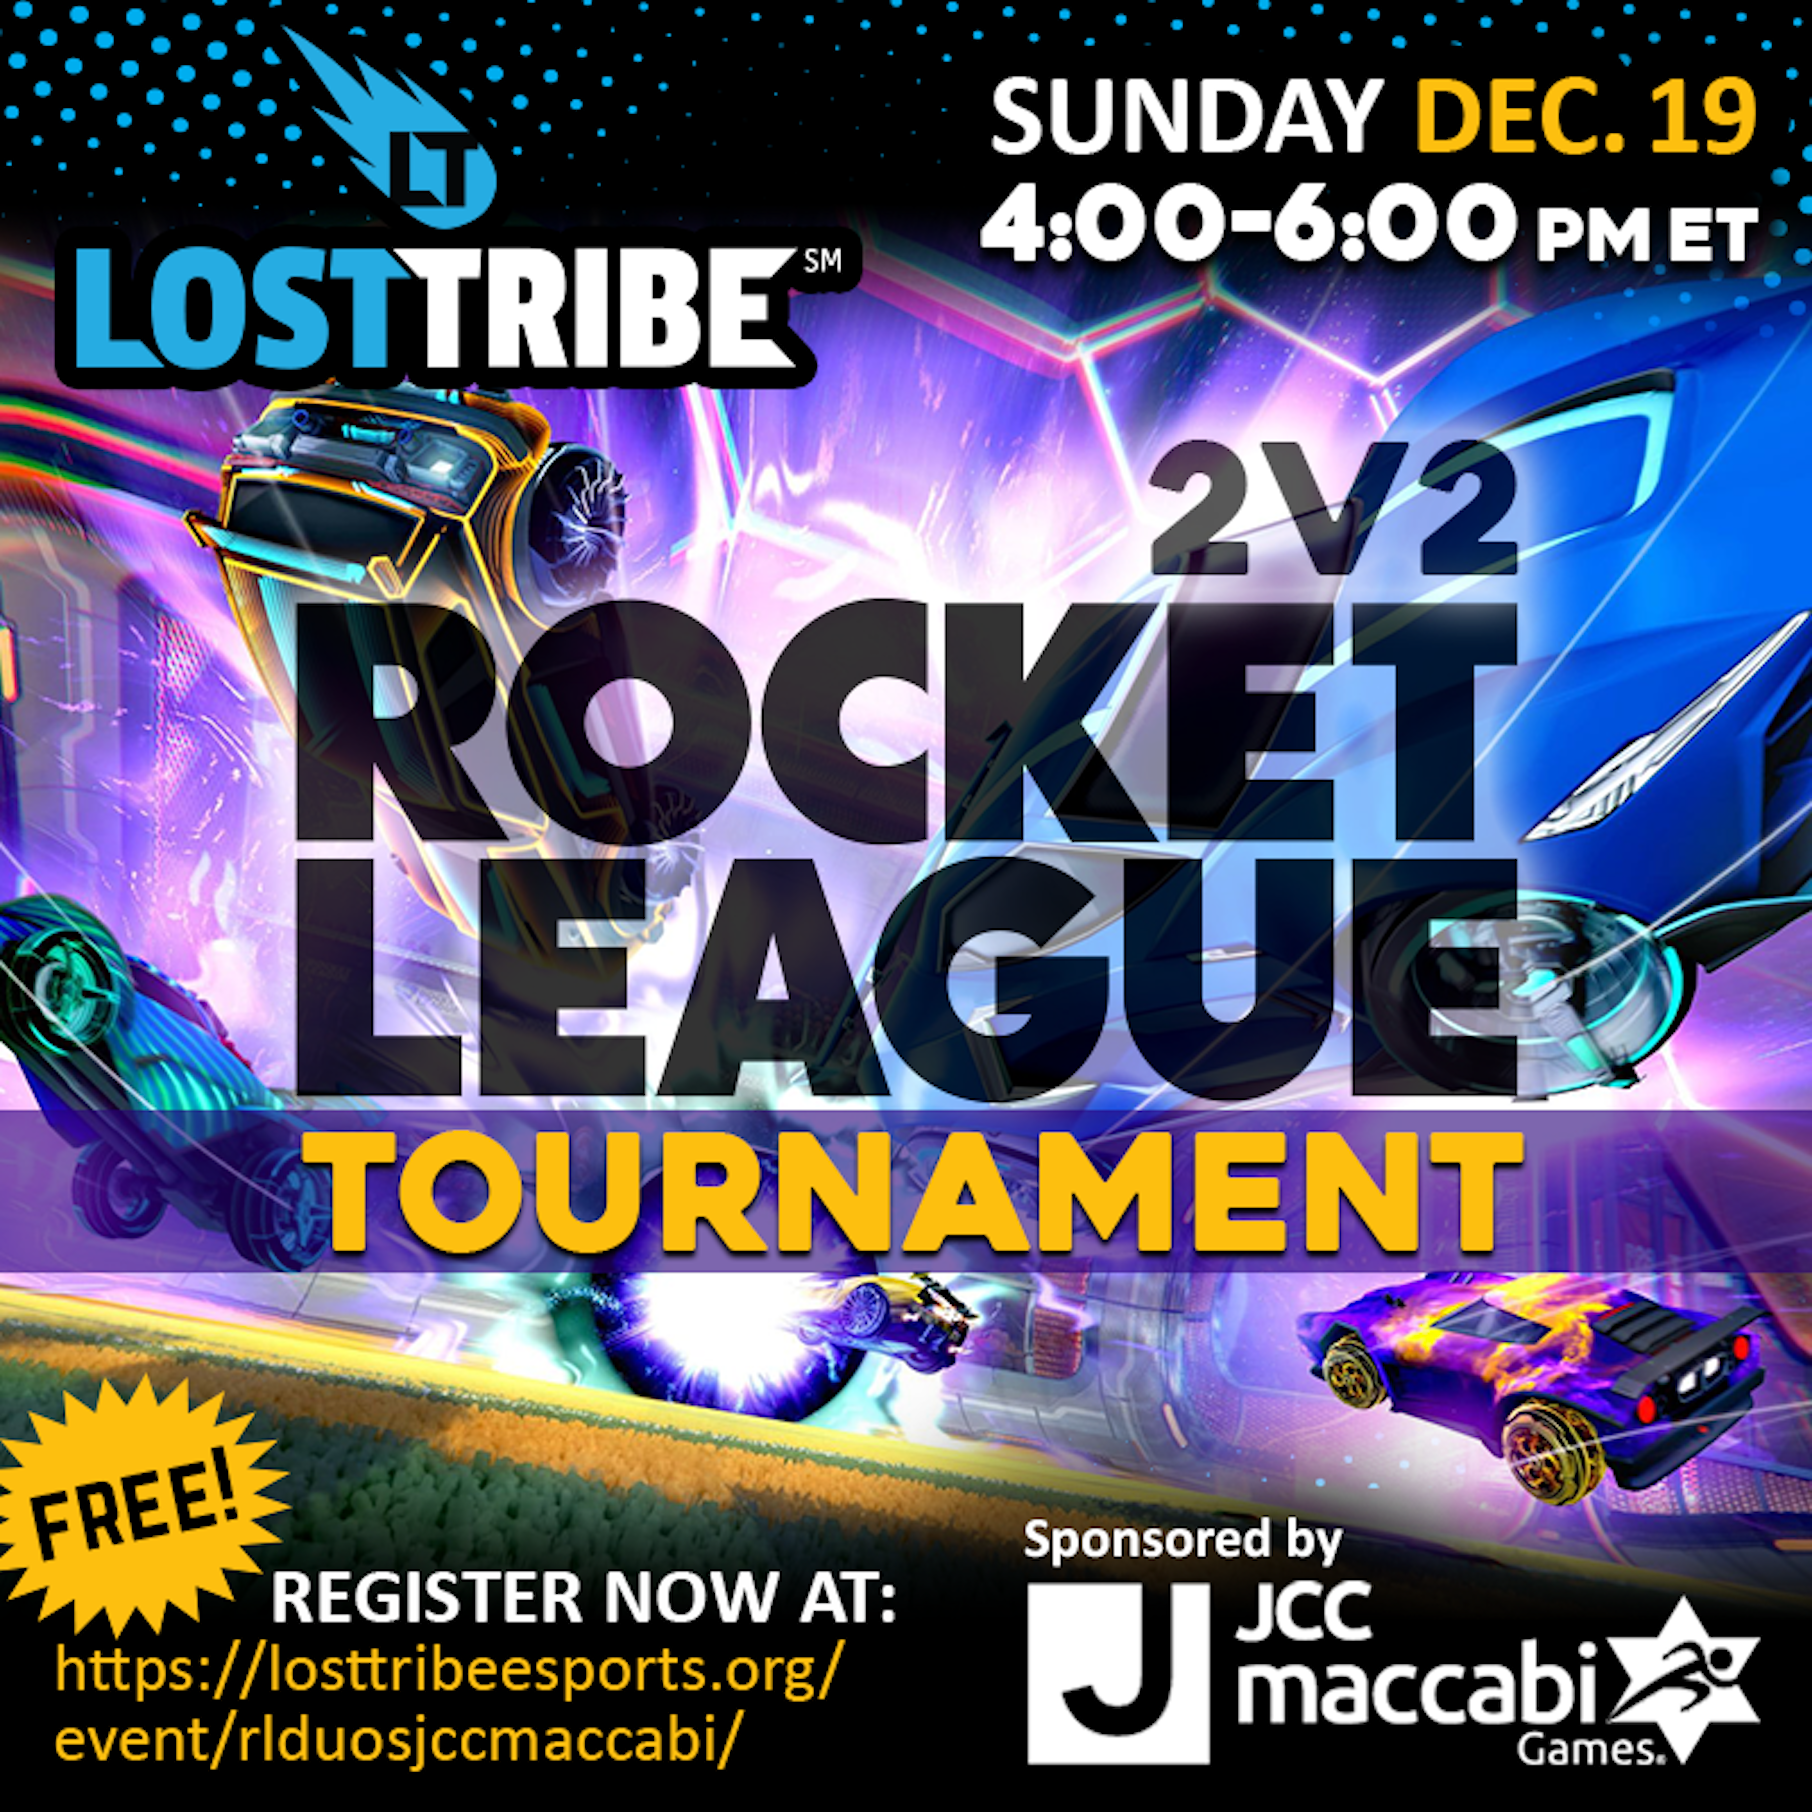 Rocket League 2v2 Sponsored by JCC Maccabi